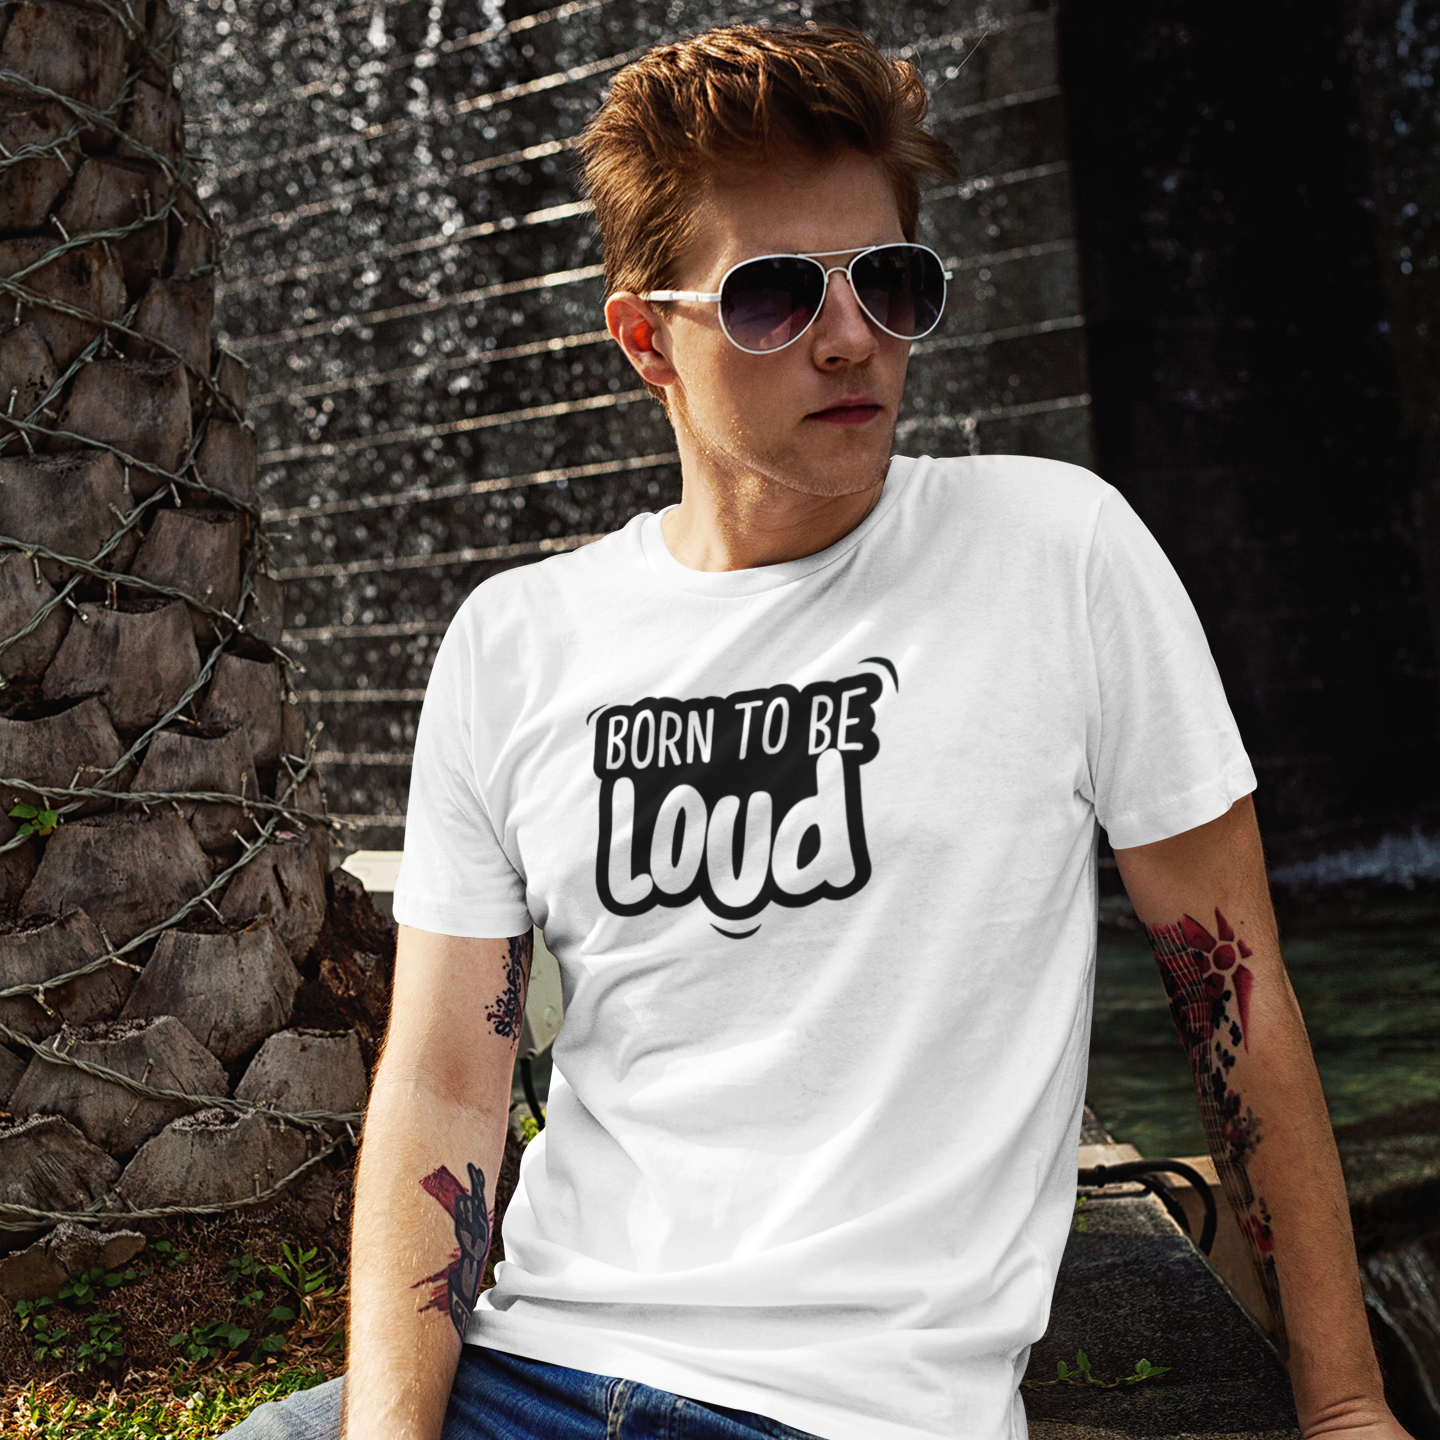 'Born to be loud' volwassene shirt